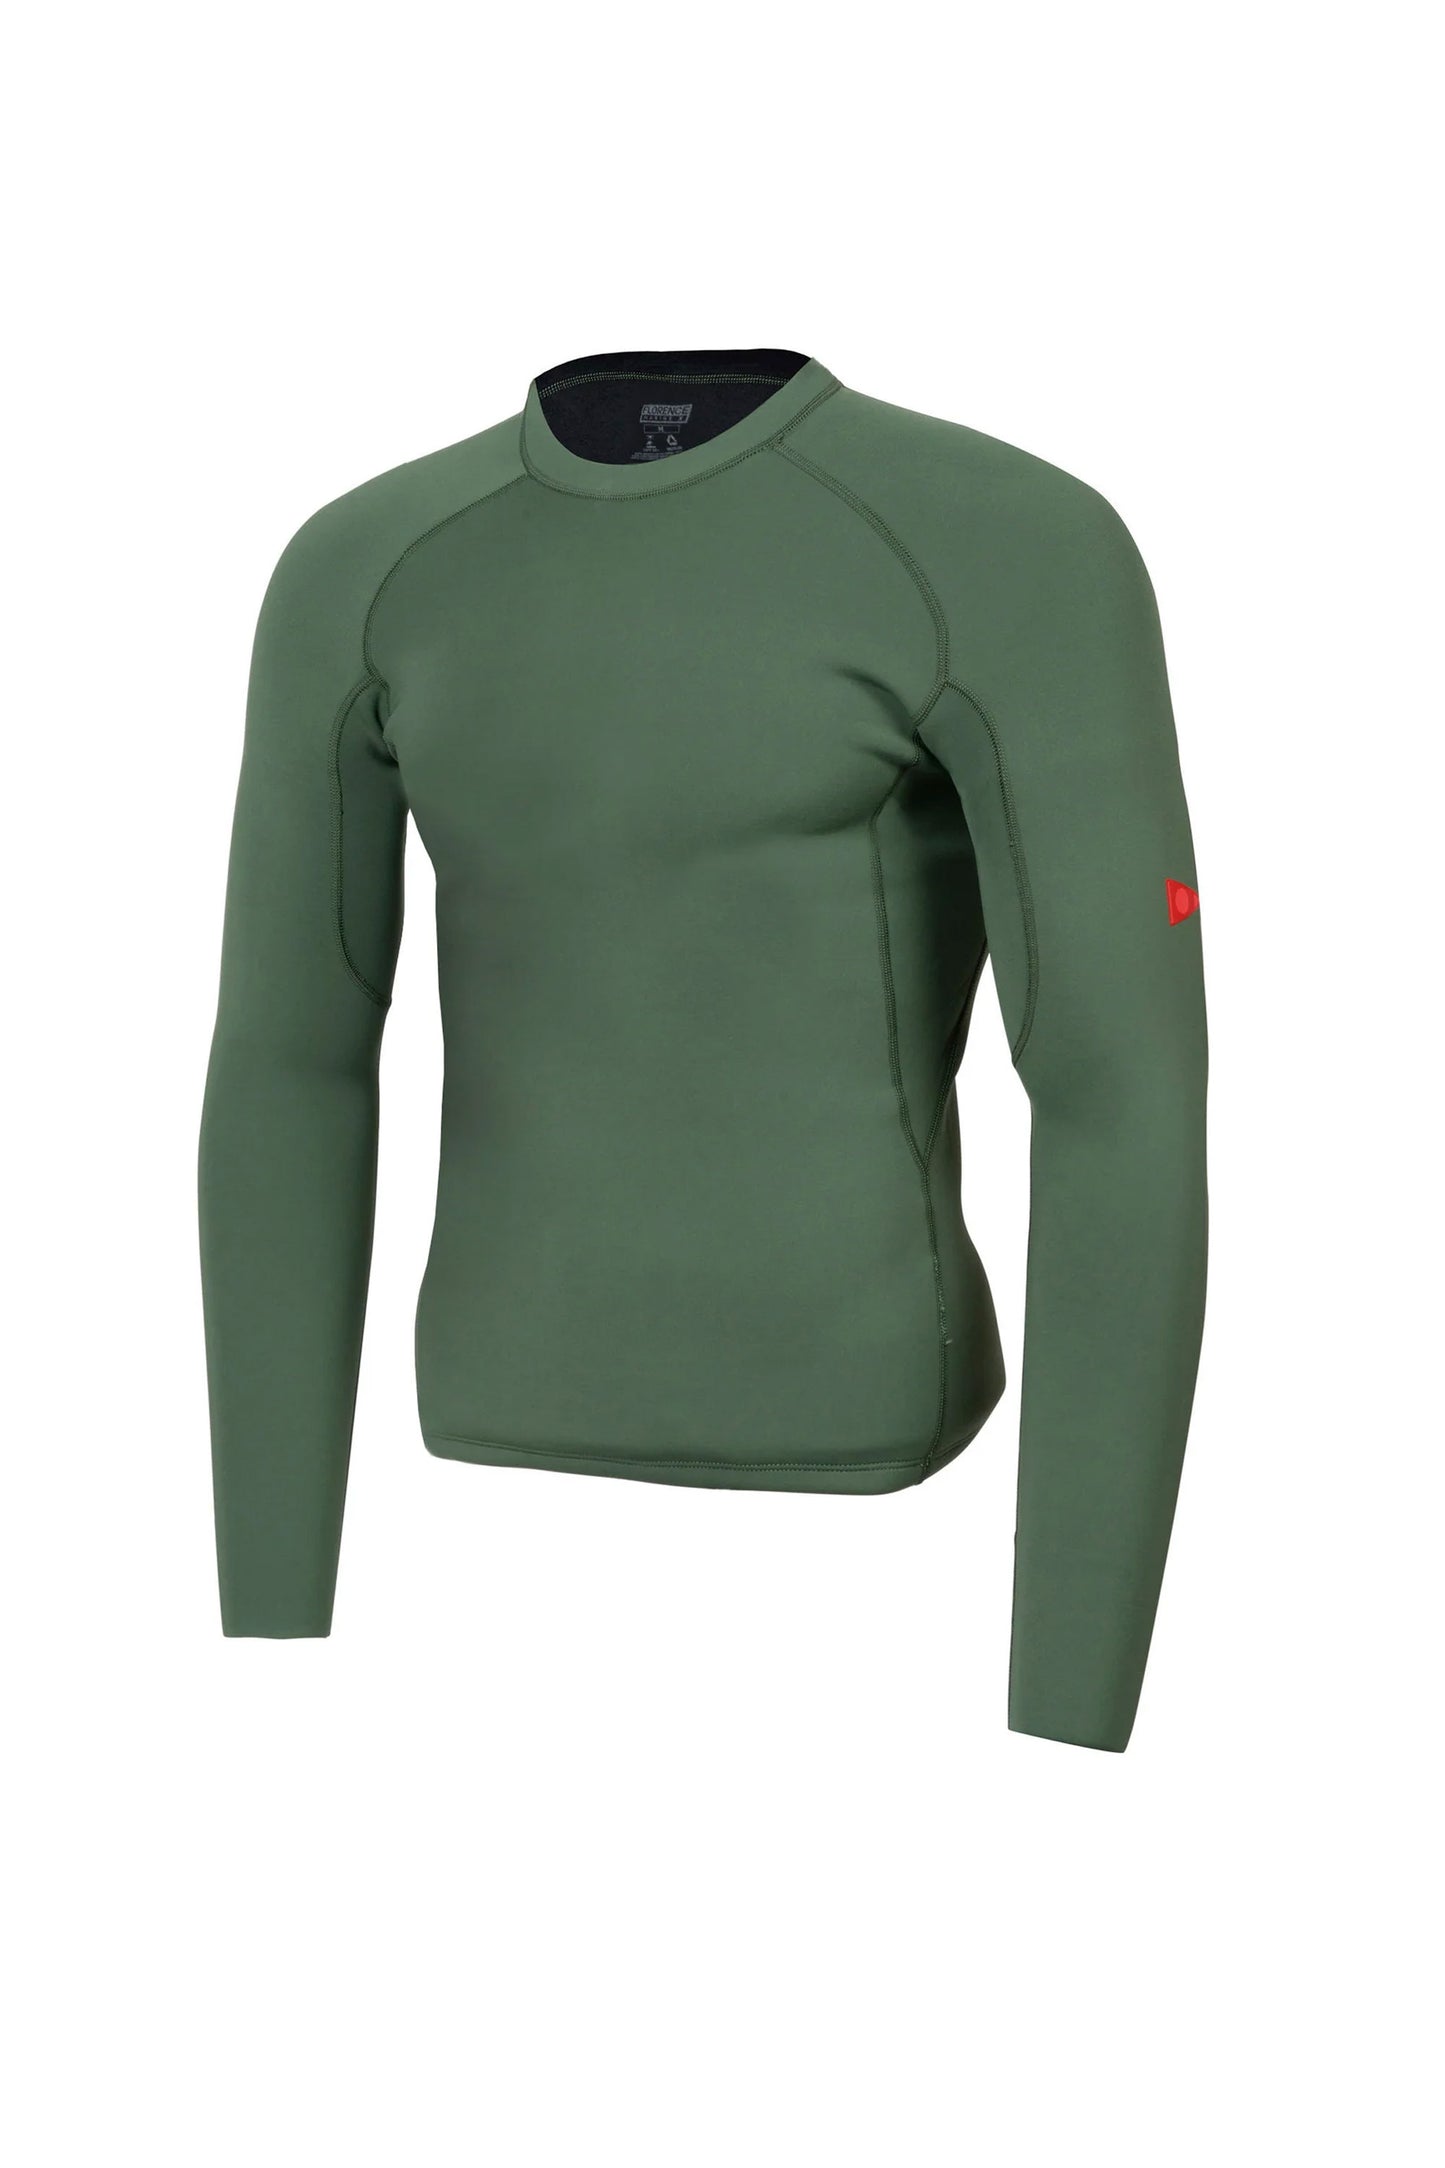 Pukas-Surf-Shop-florence-marine-1-5-flatlock-wetsuit-jacket-green